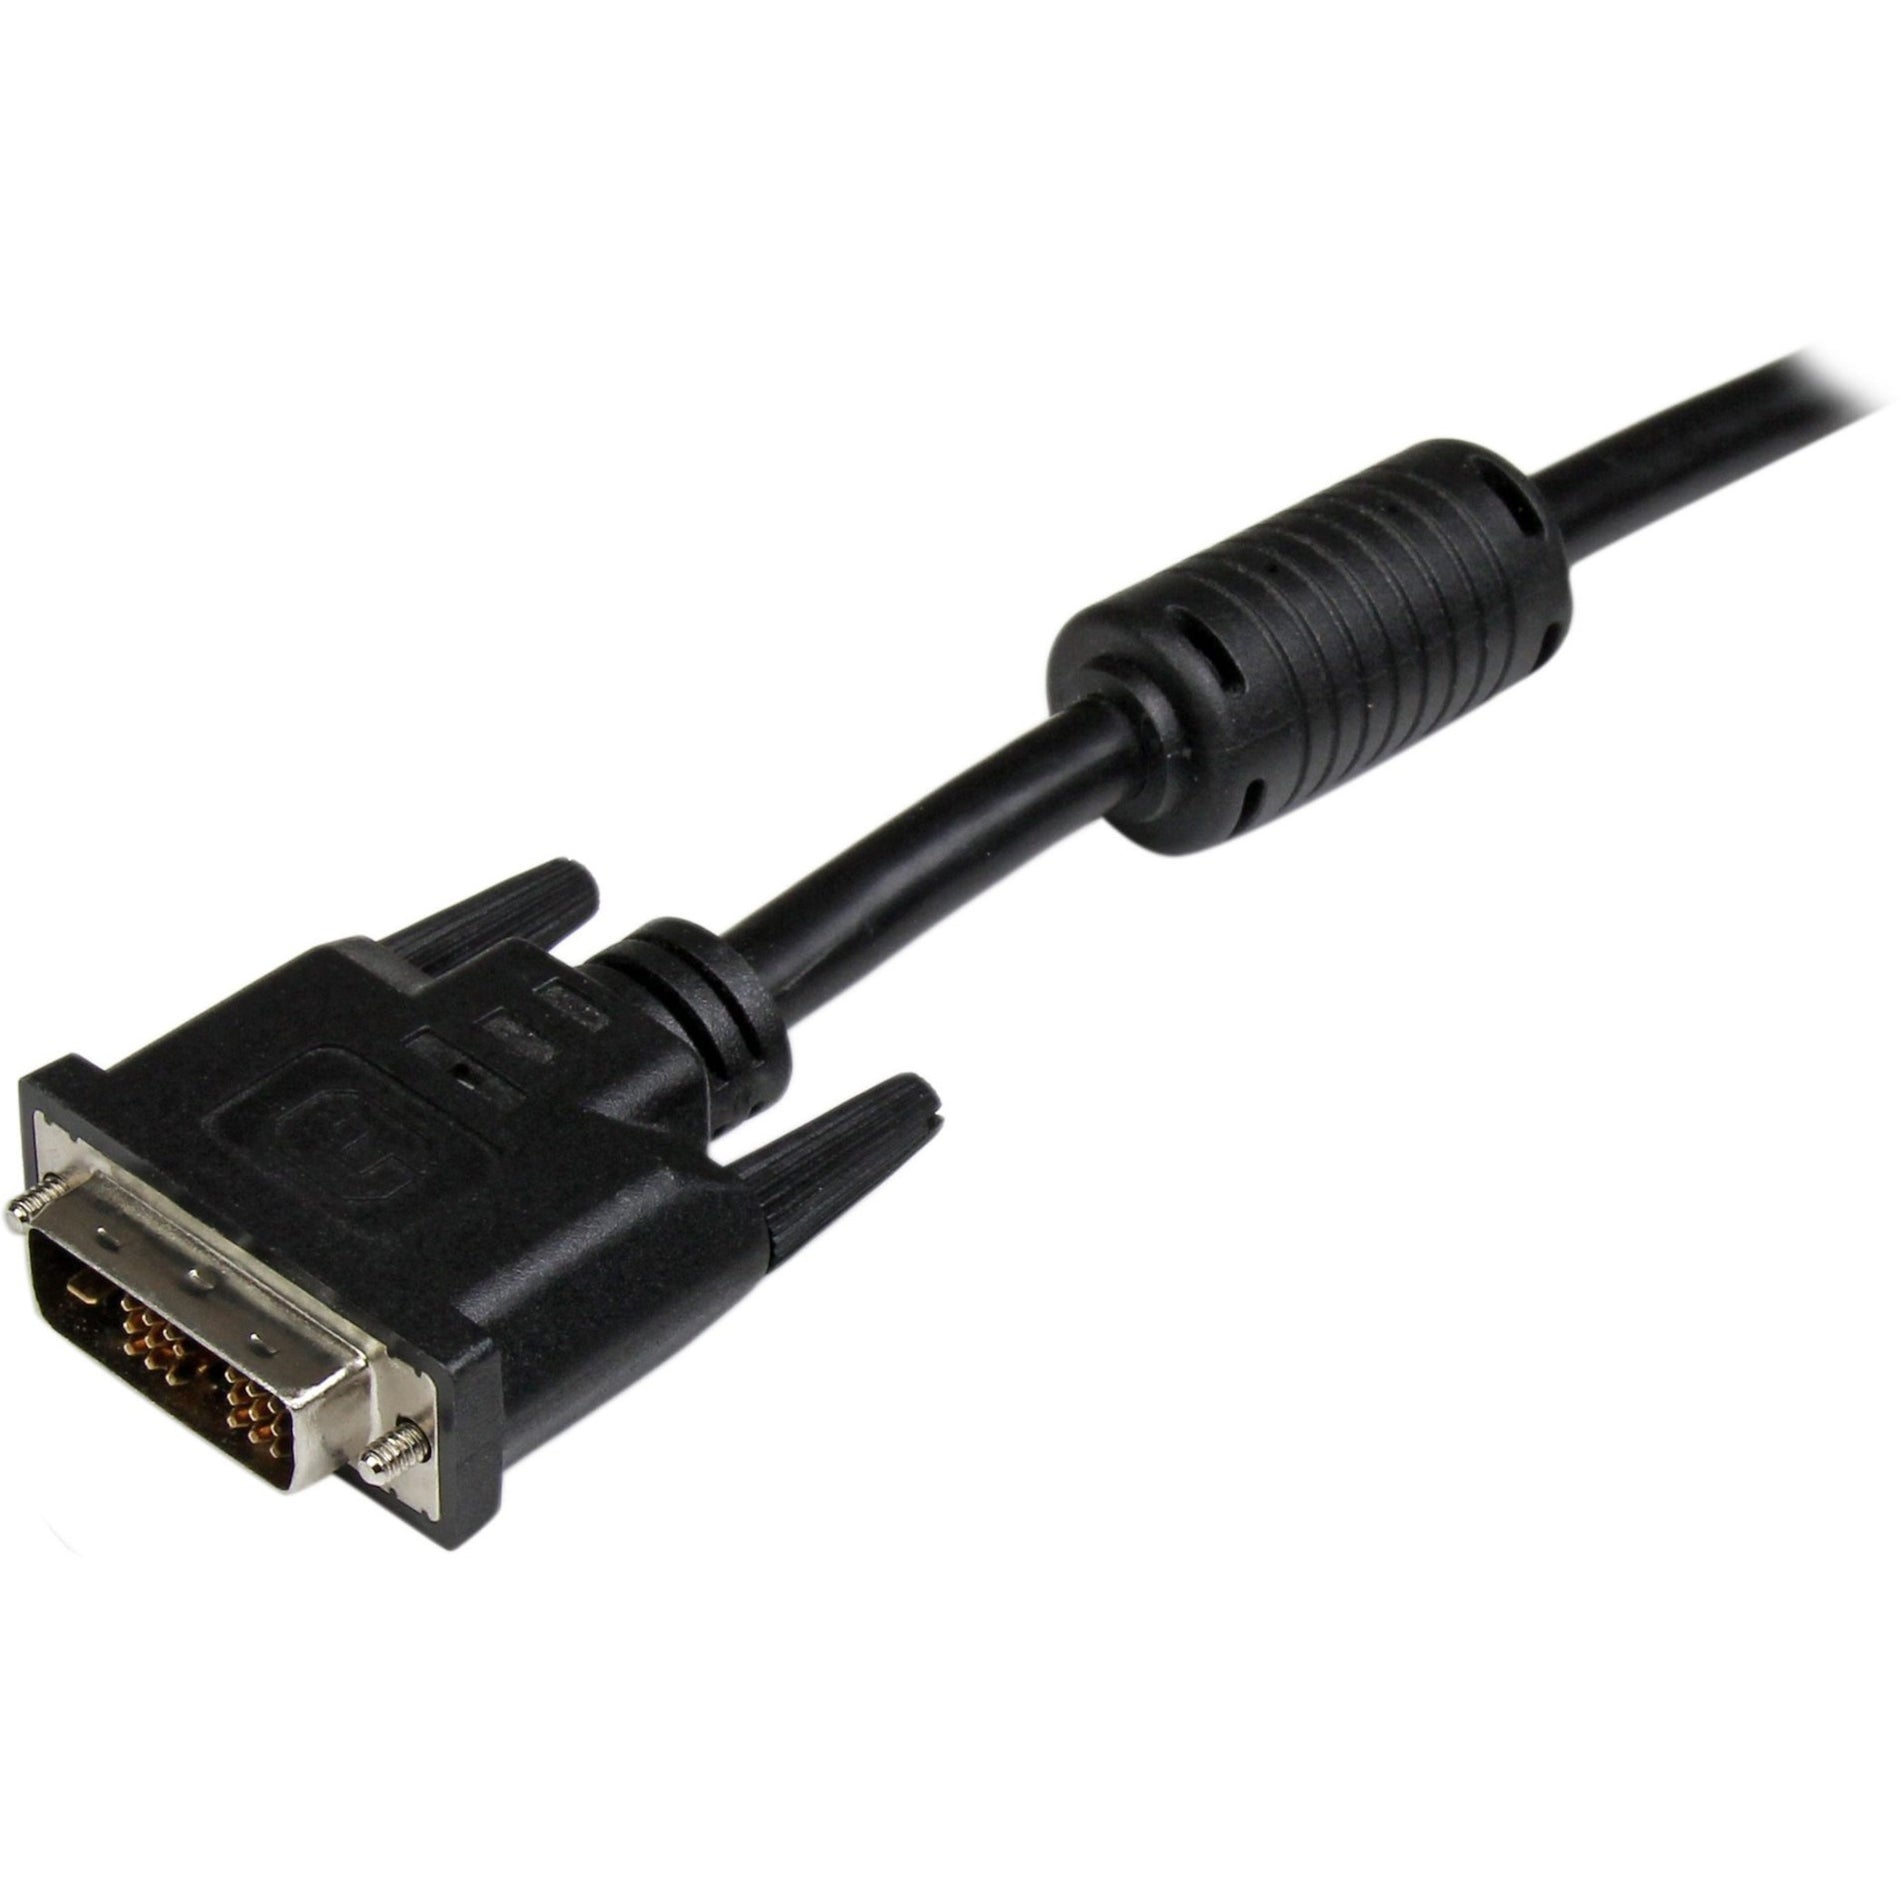 StarTech.com DVIDSMM35 DVI Single Link Video Cable, 35 ft - High-Speed Digital Video Transmission [Discontinued]